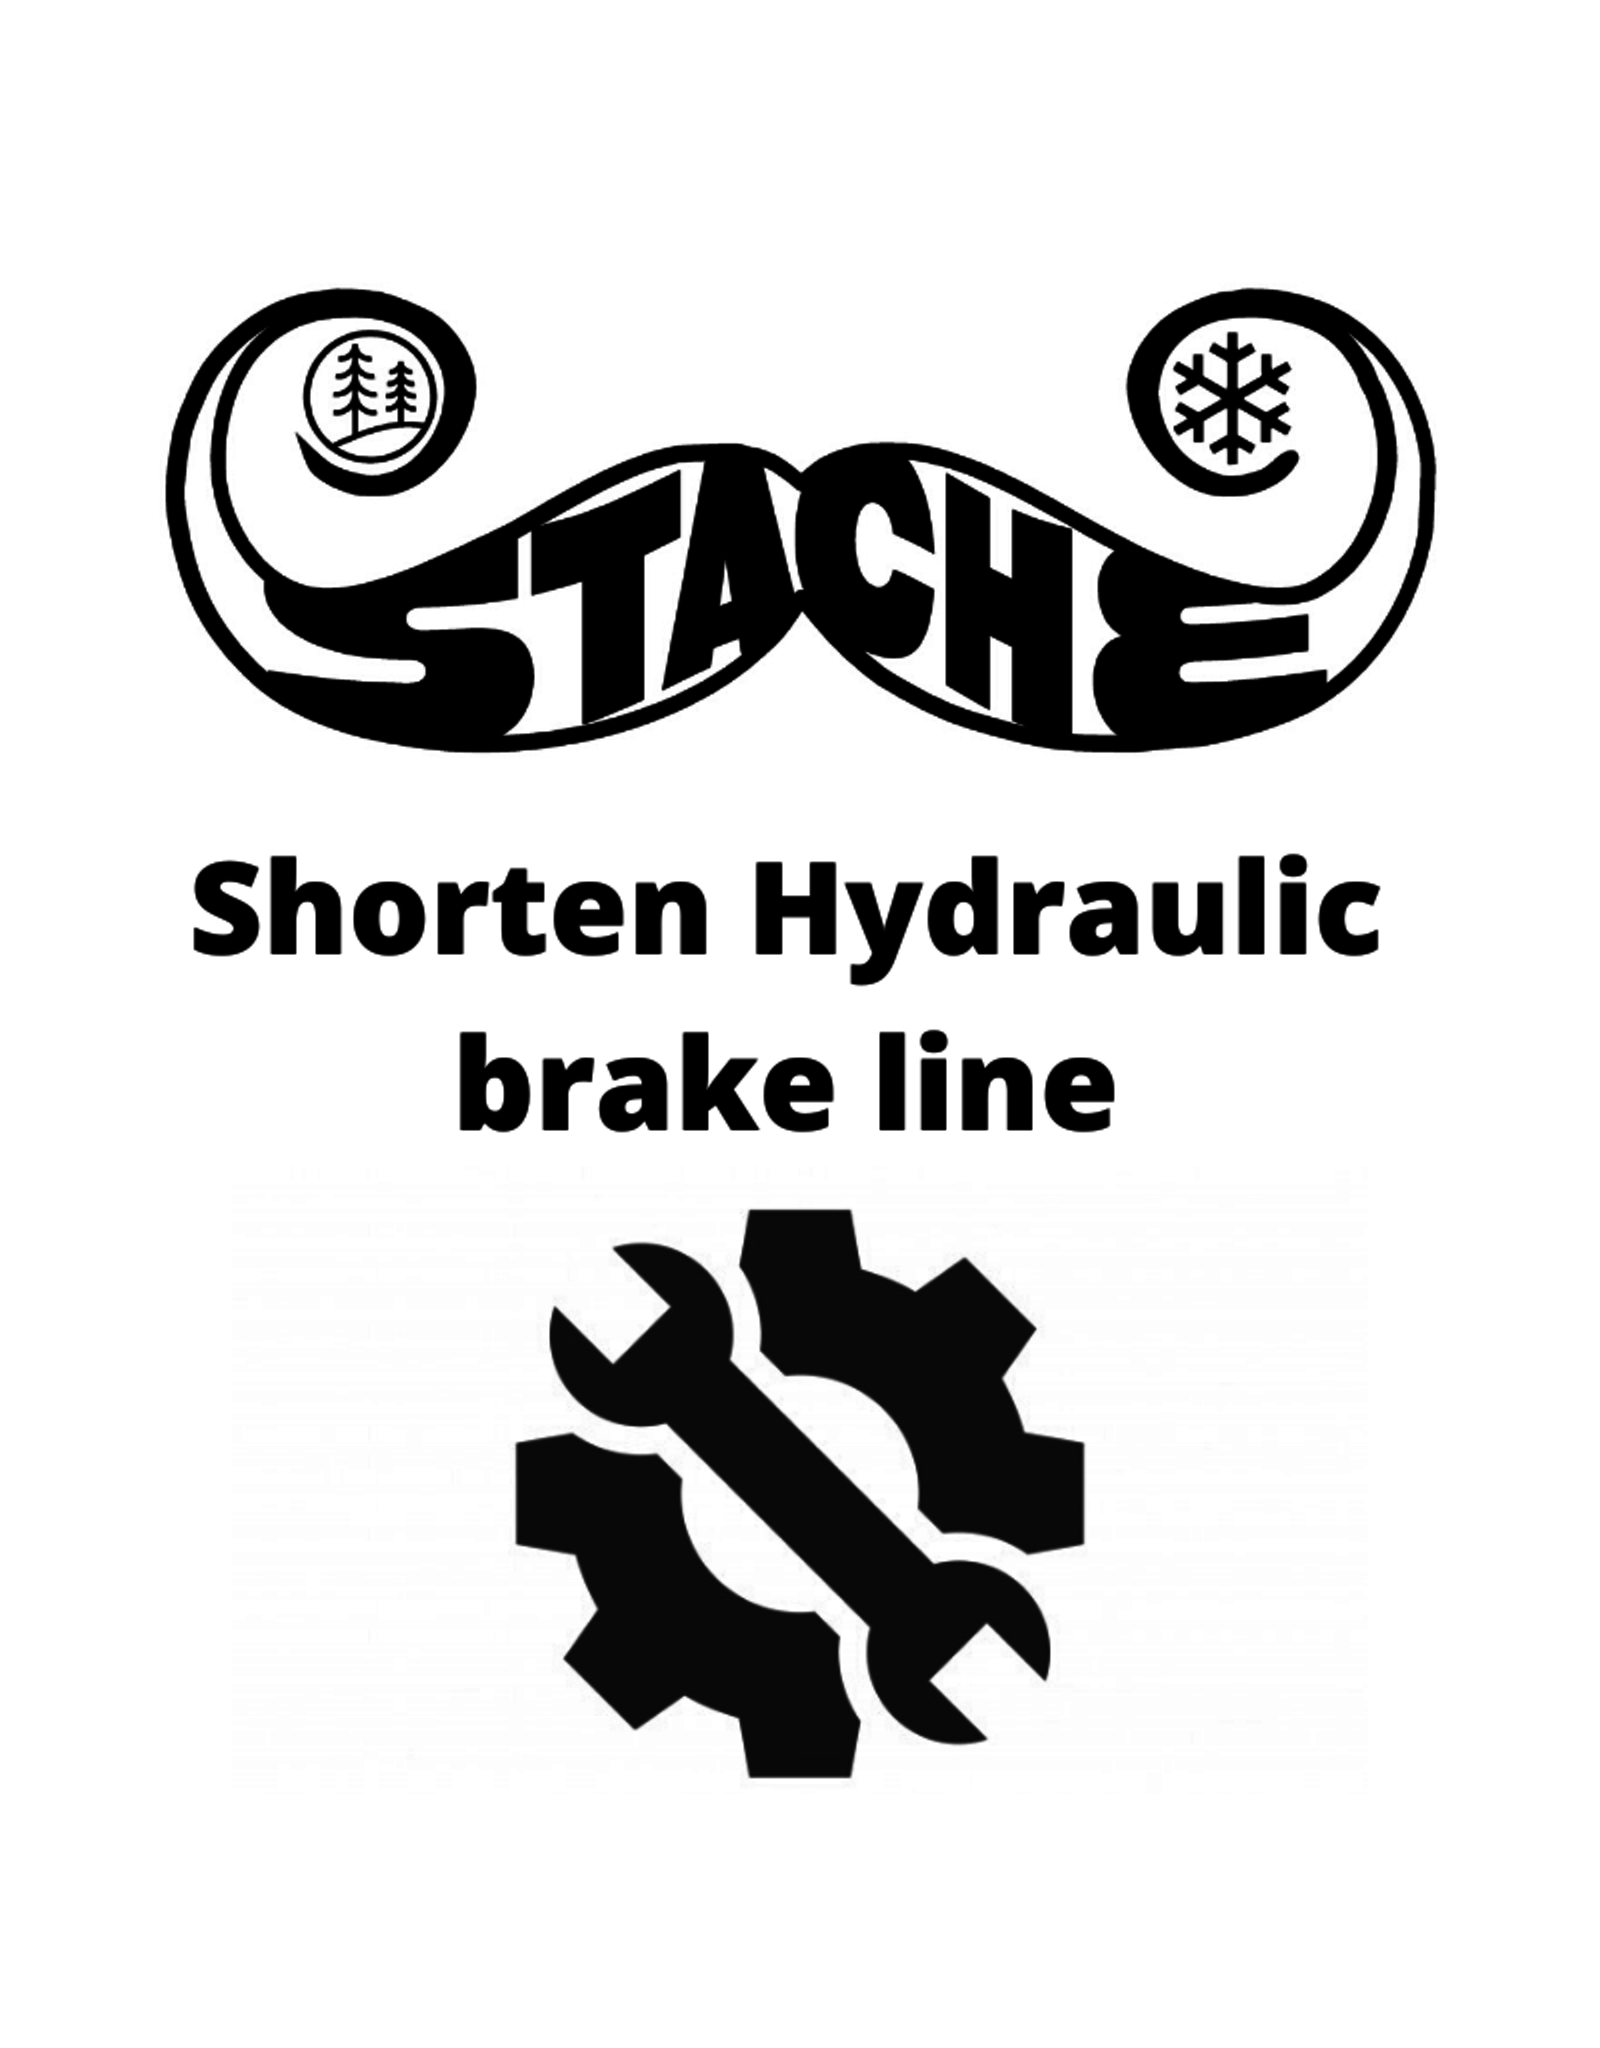 Shorten Hydro brake line